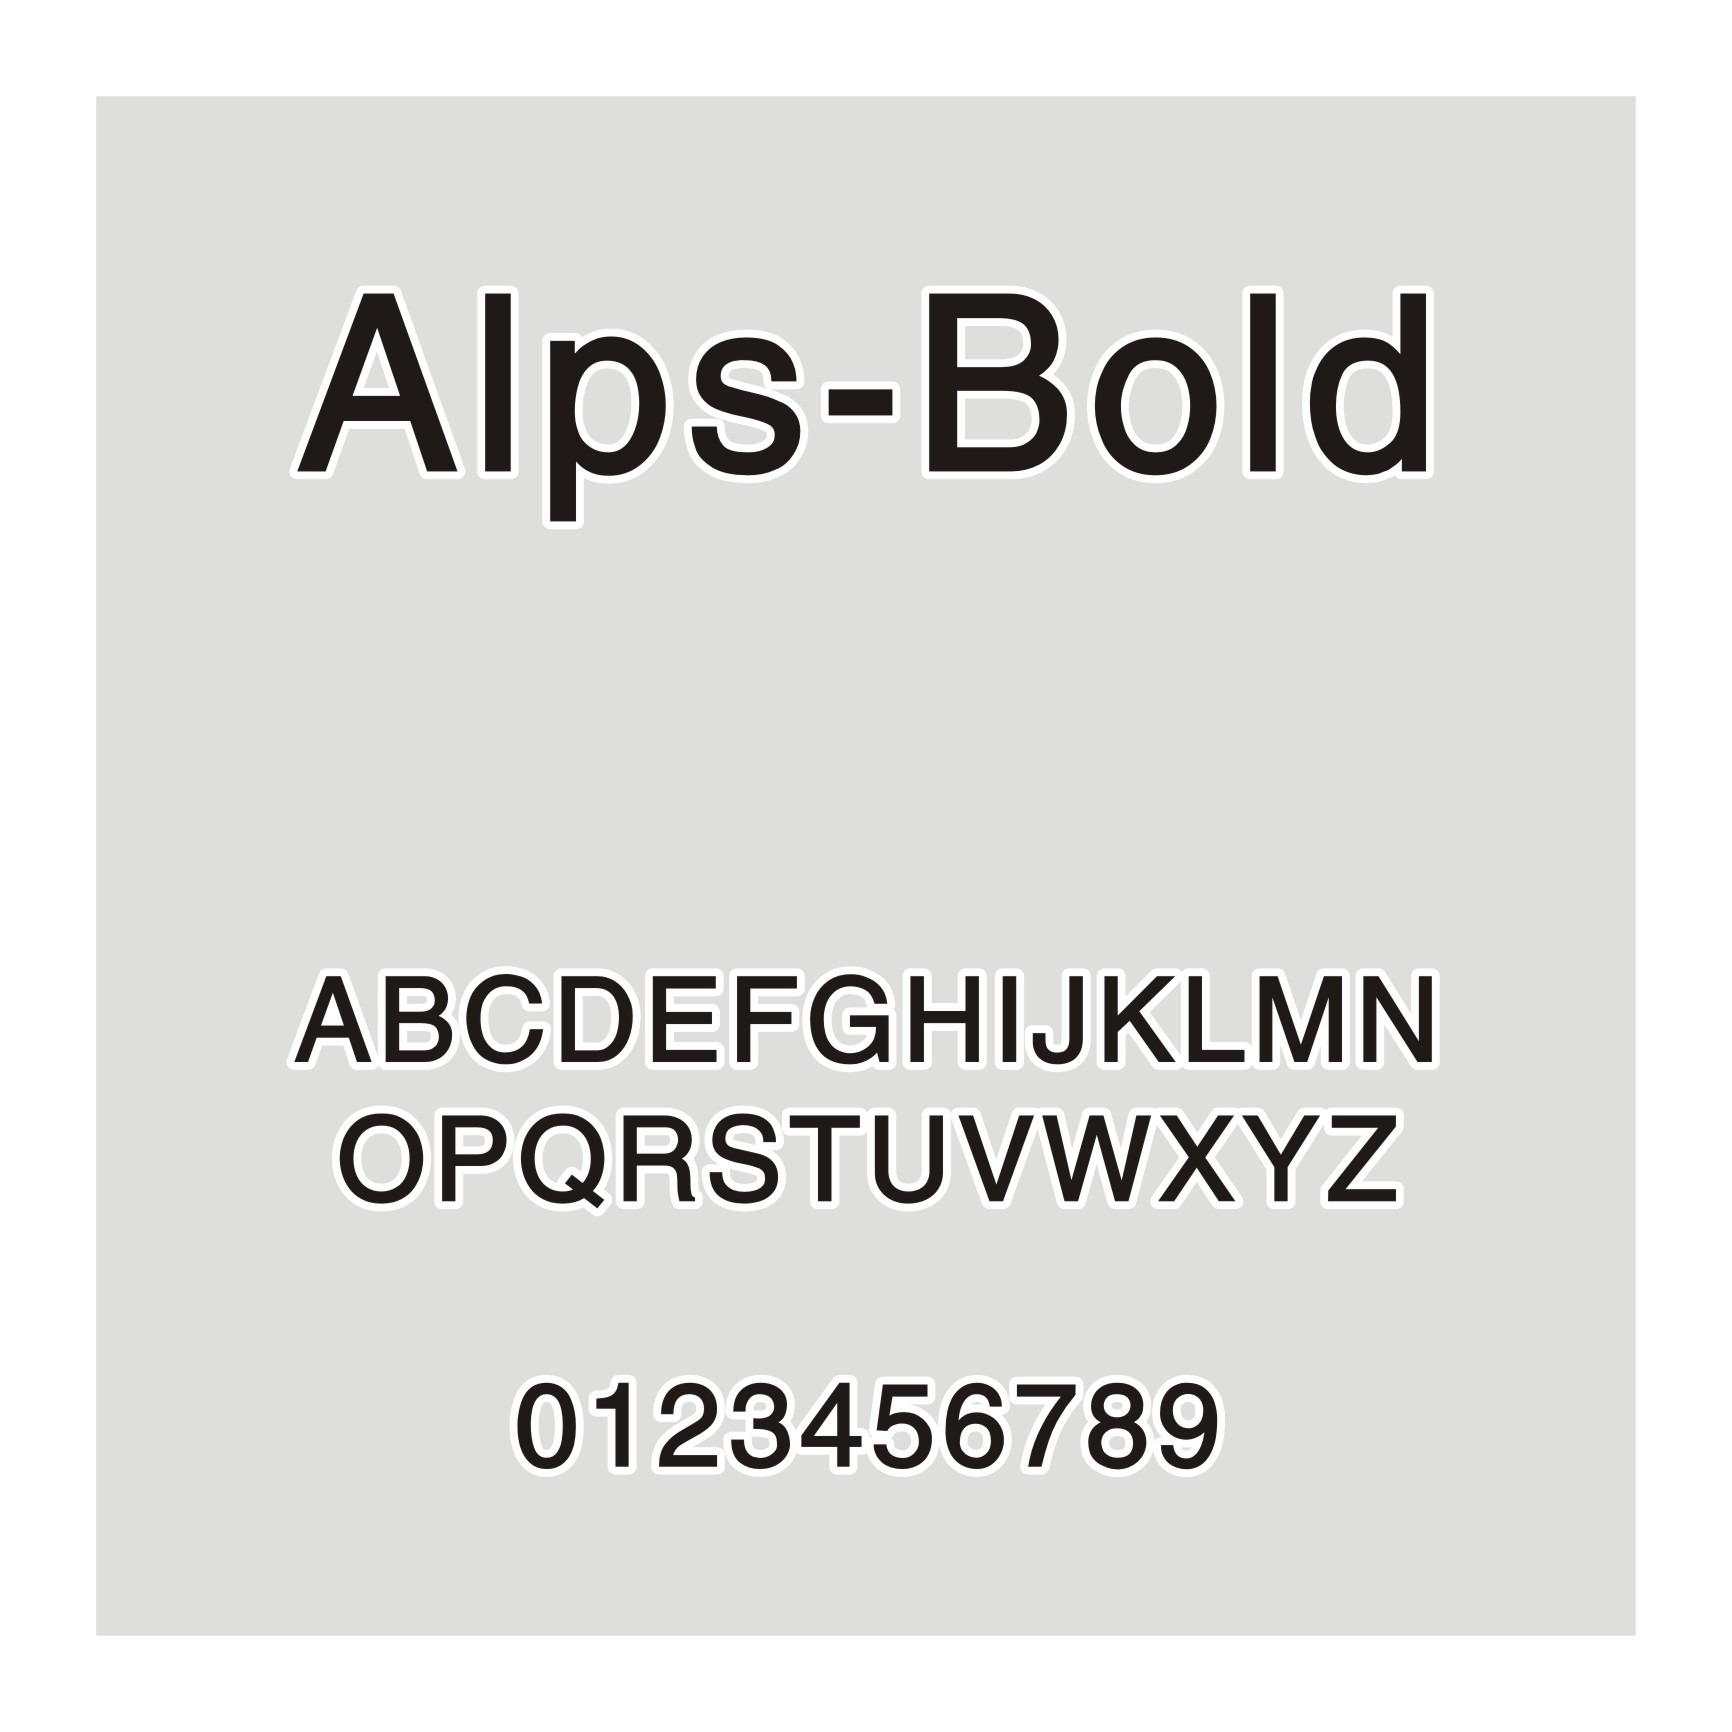 Alps-Bold